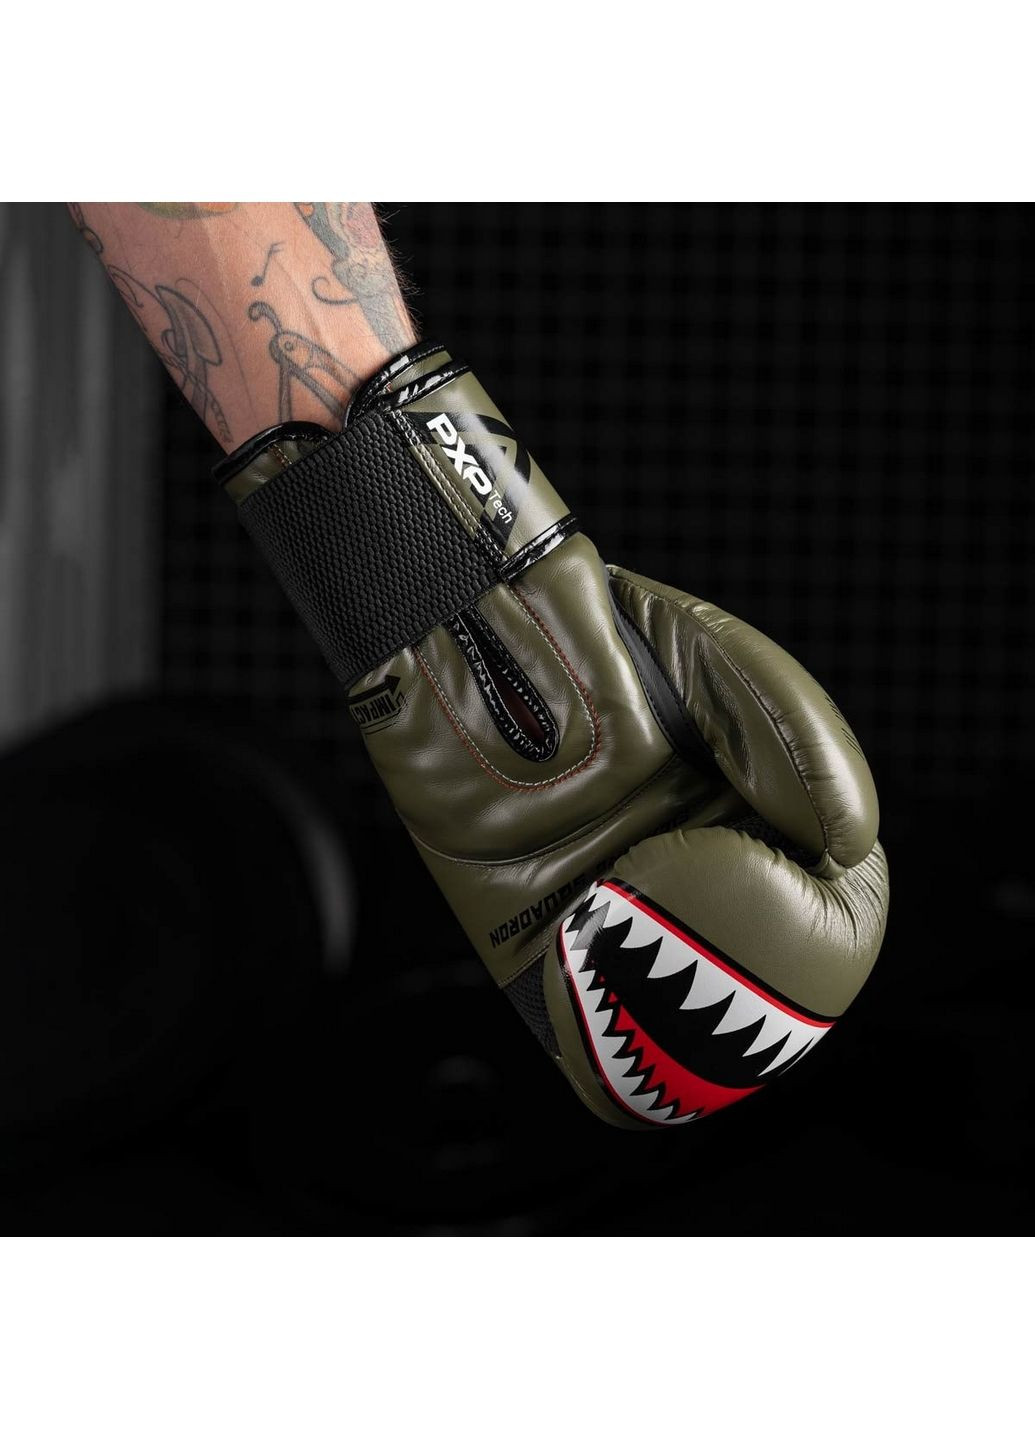 Боксерские перчатки Fight Squad Army Phantom (279317731)